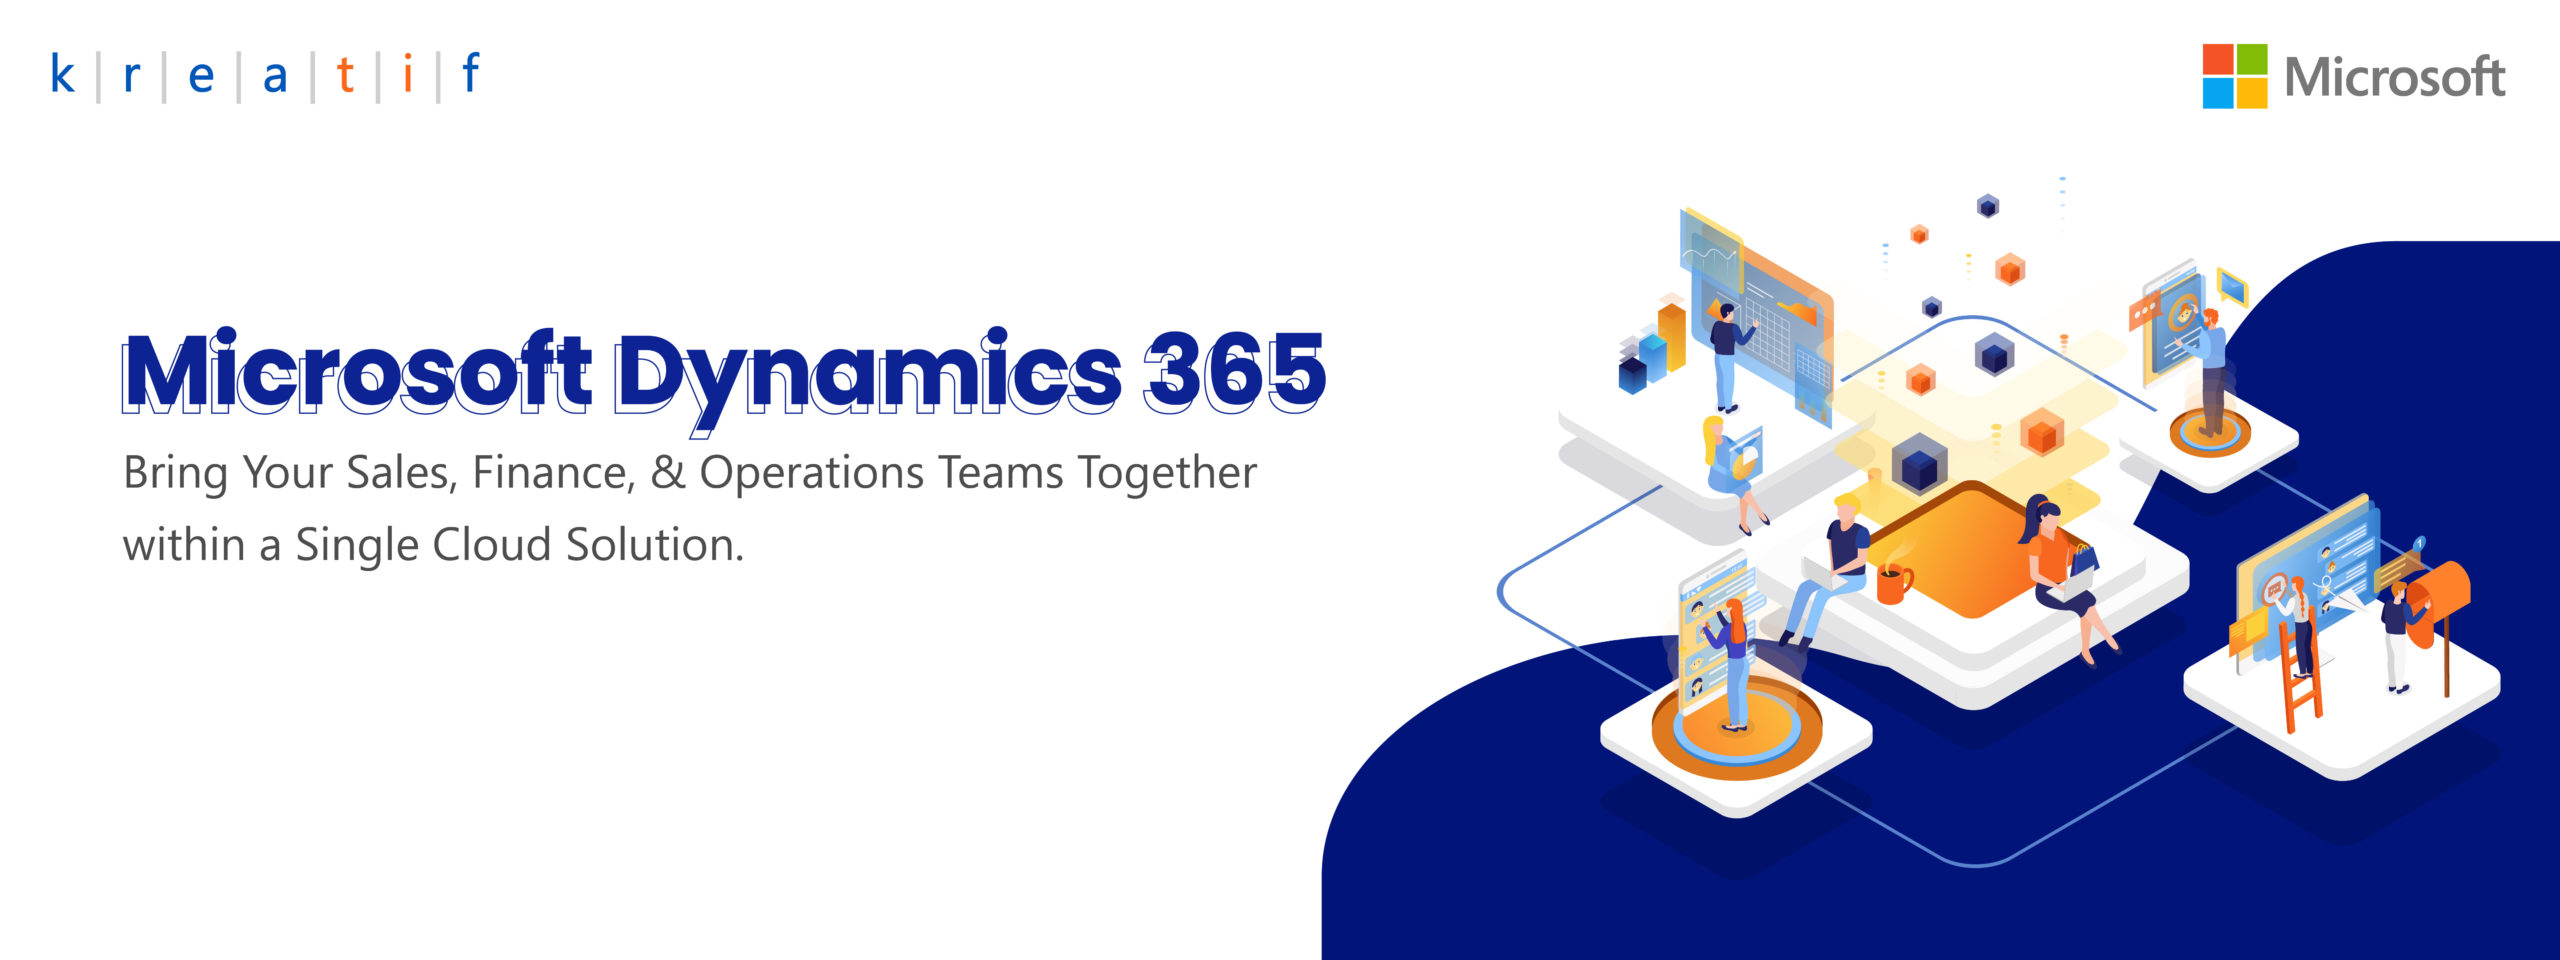 Aplikasi Dyamics 365 for SMB